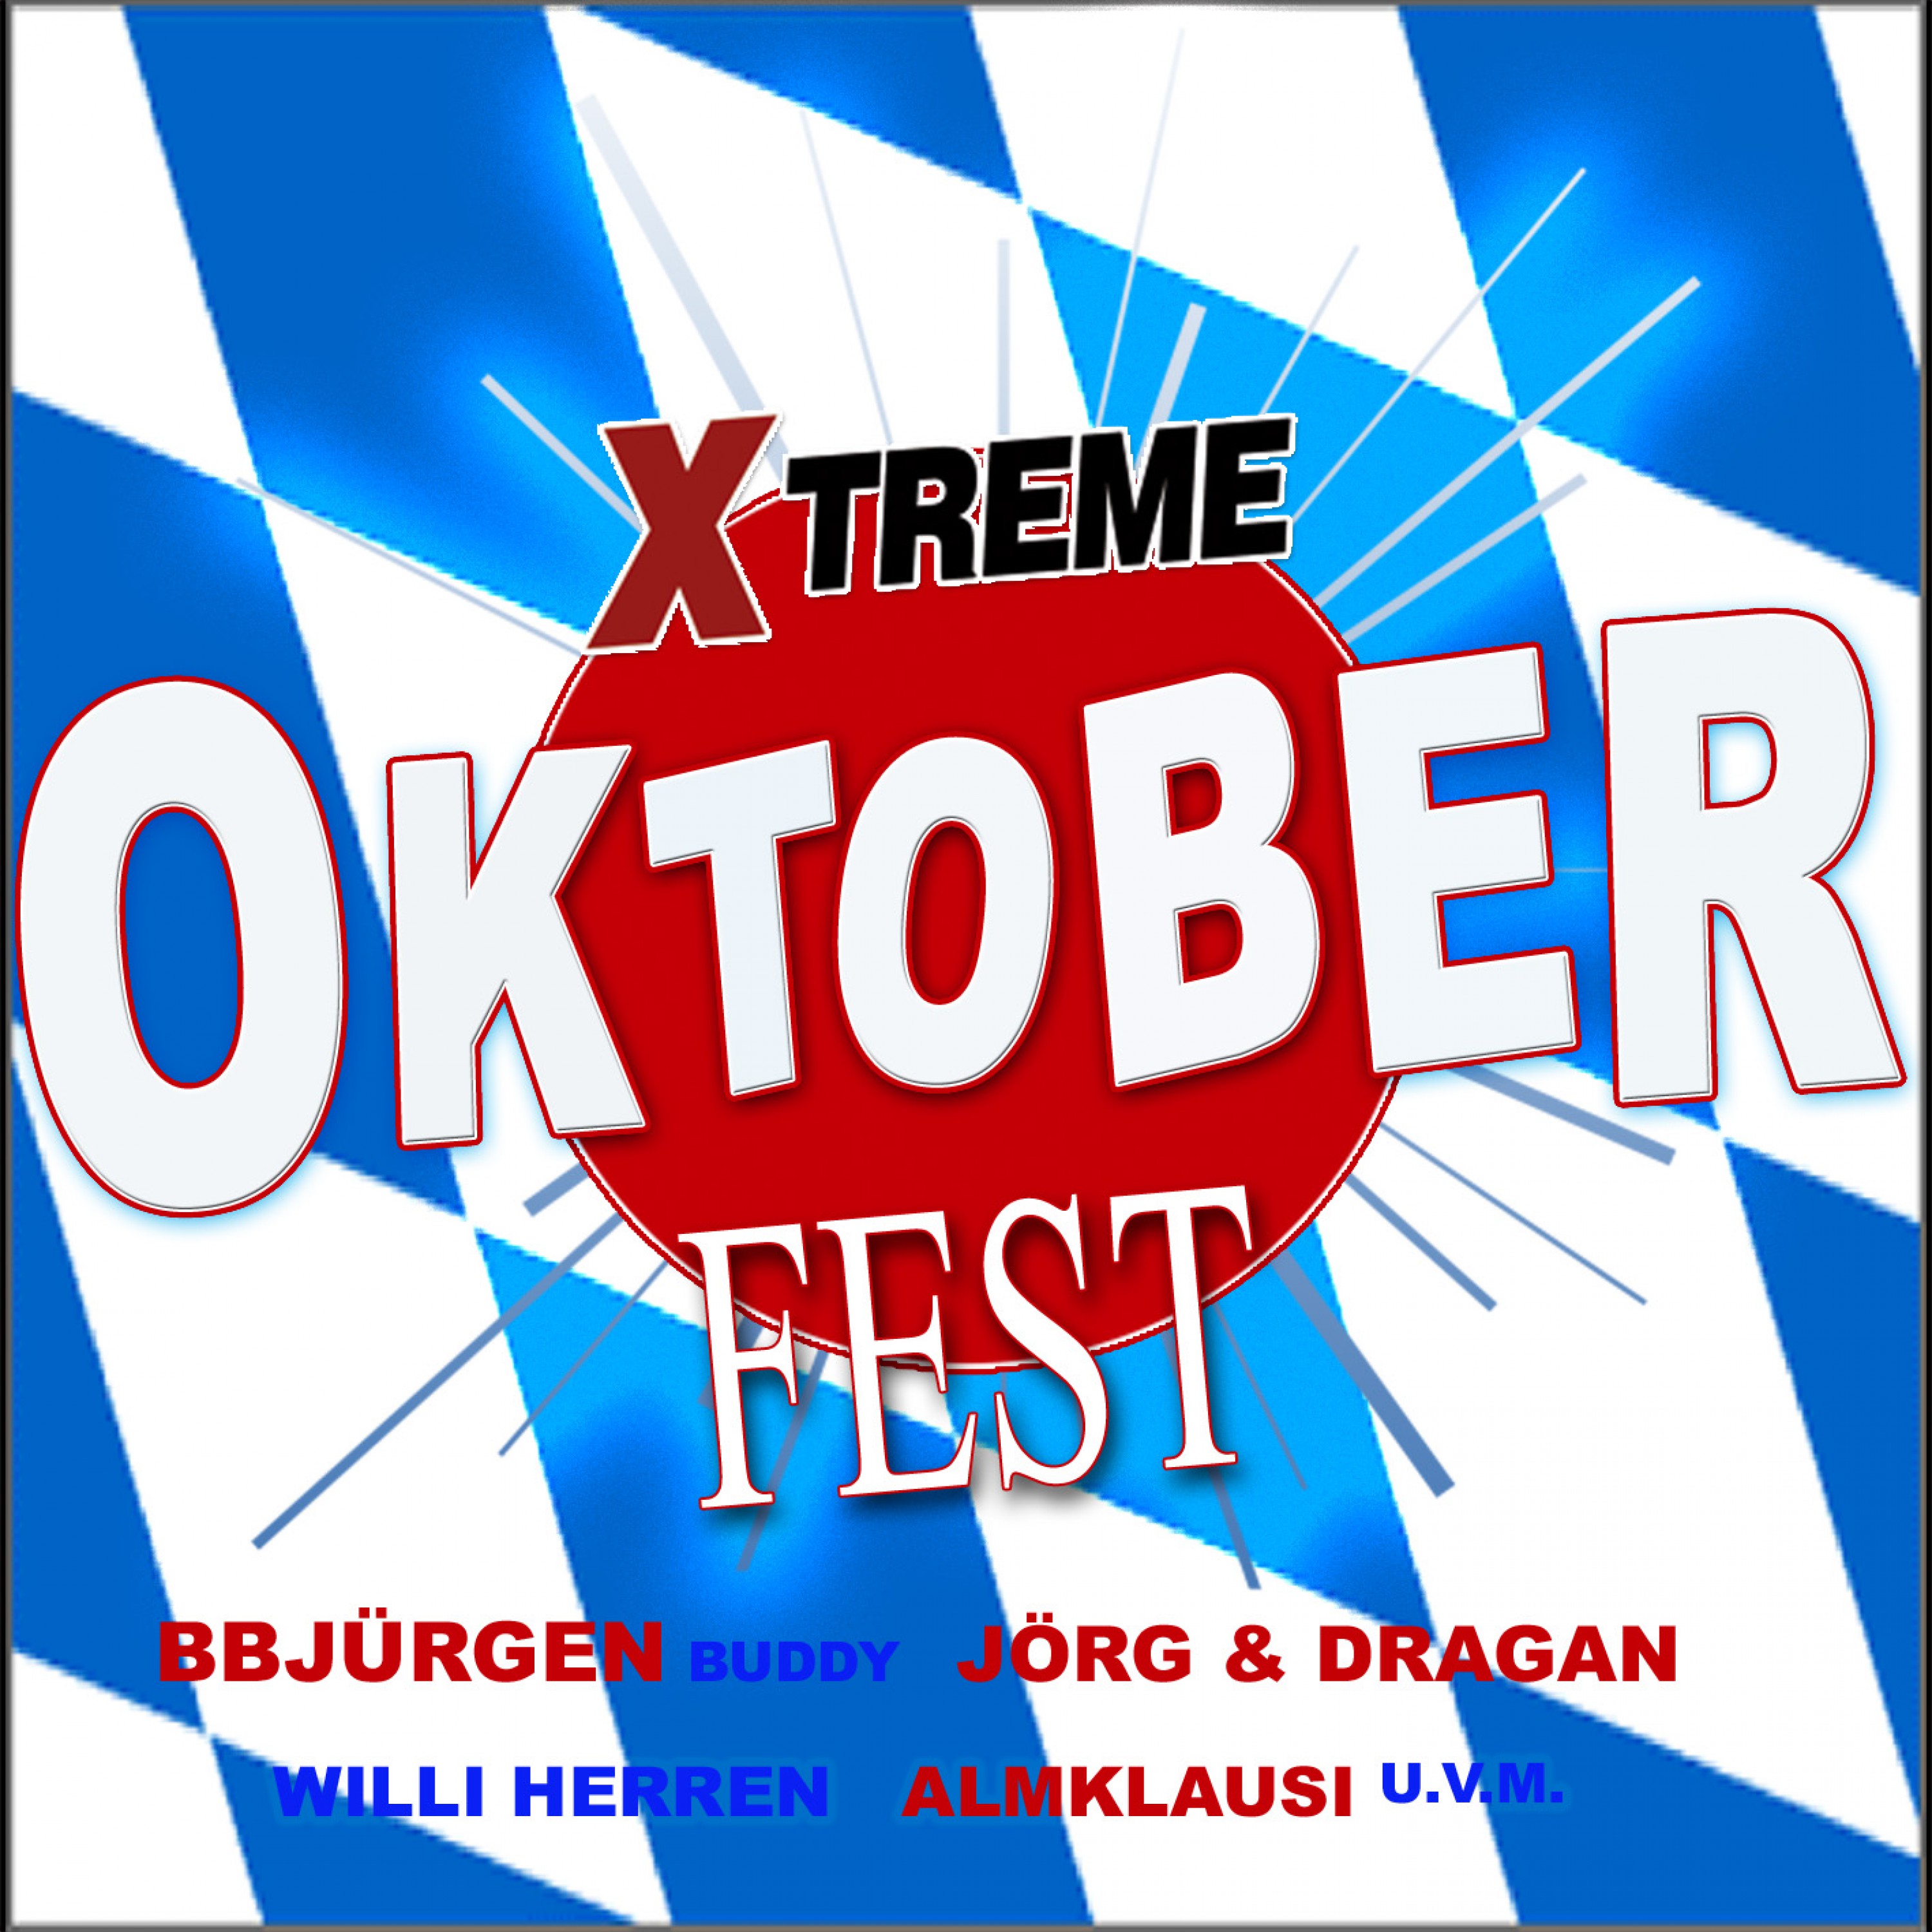 Xtreme Traxx Oktoberfest 2009